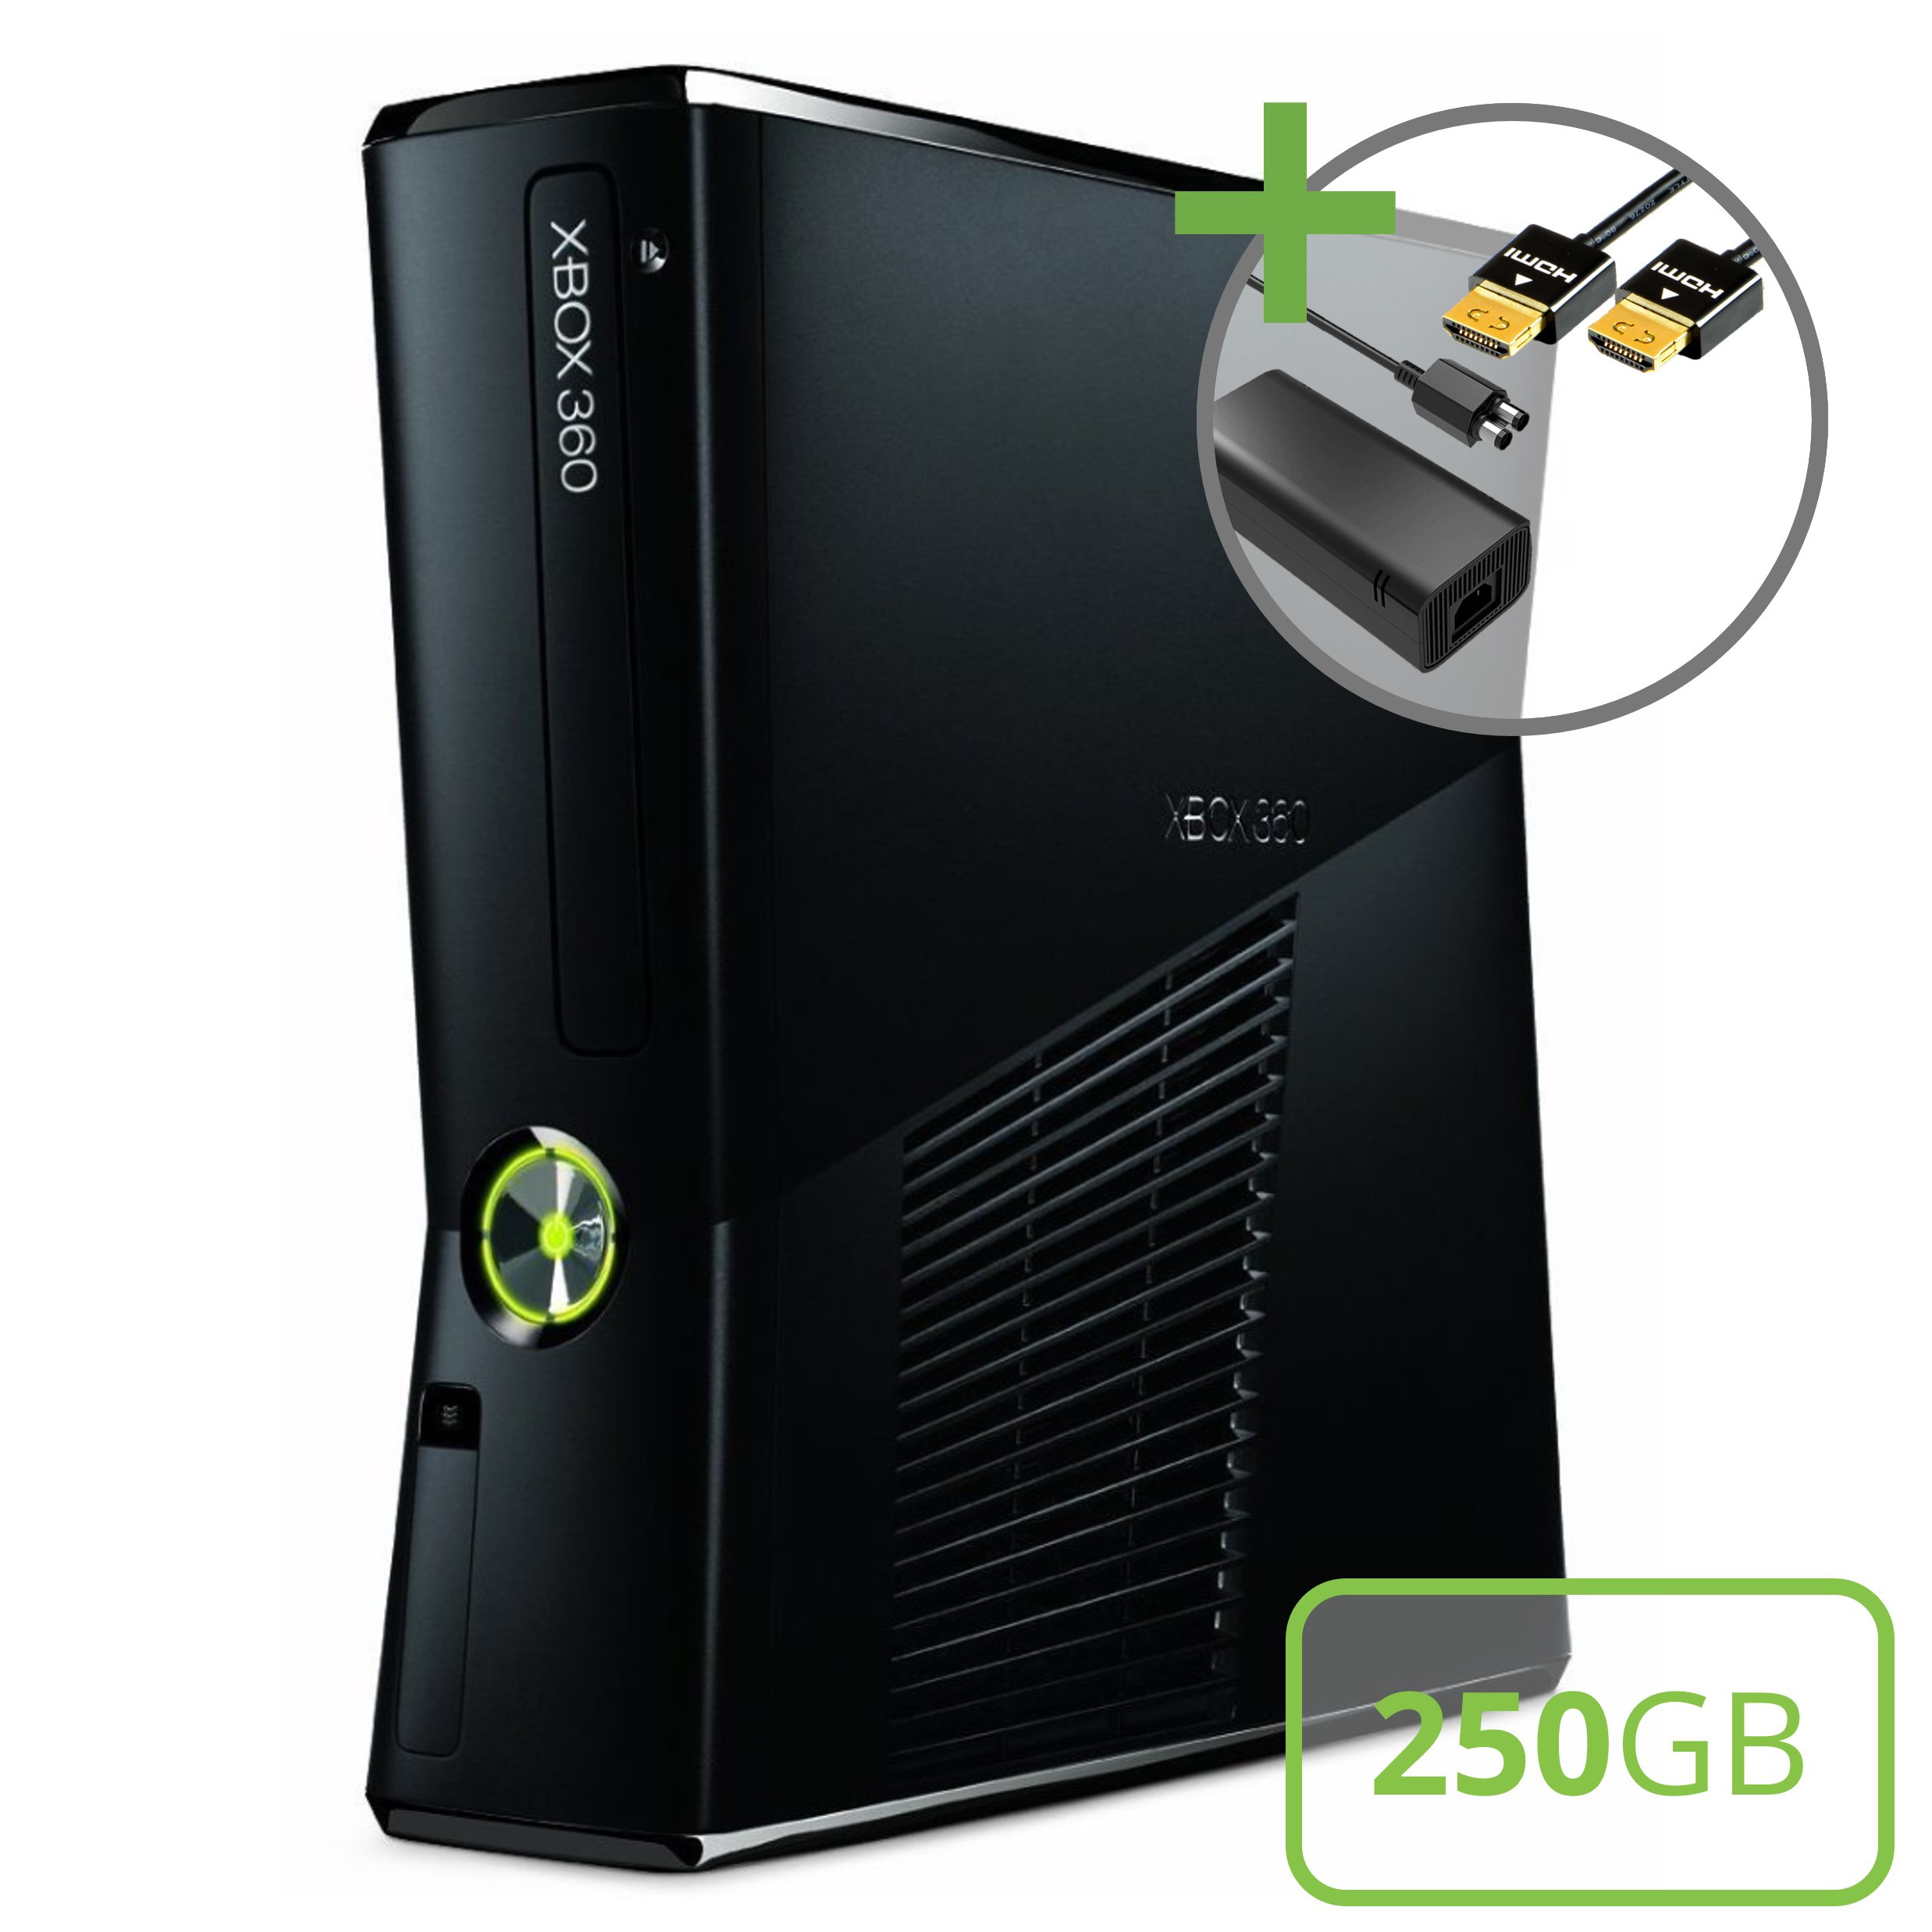 Microsoft Xbox 360 Slim Console (250GB) - Xbox 360 Hardware